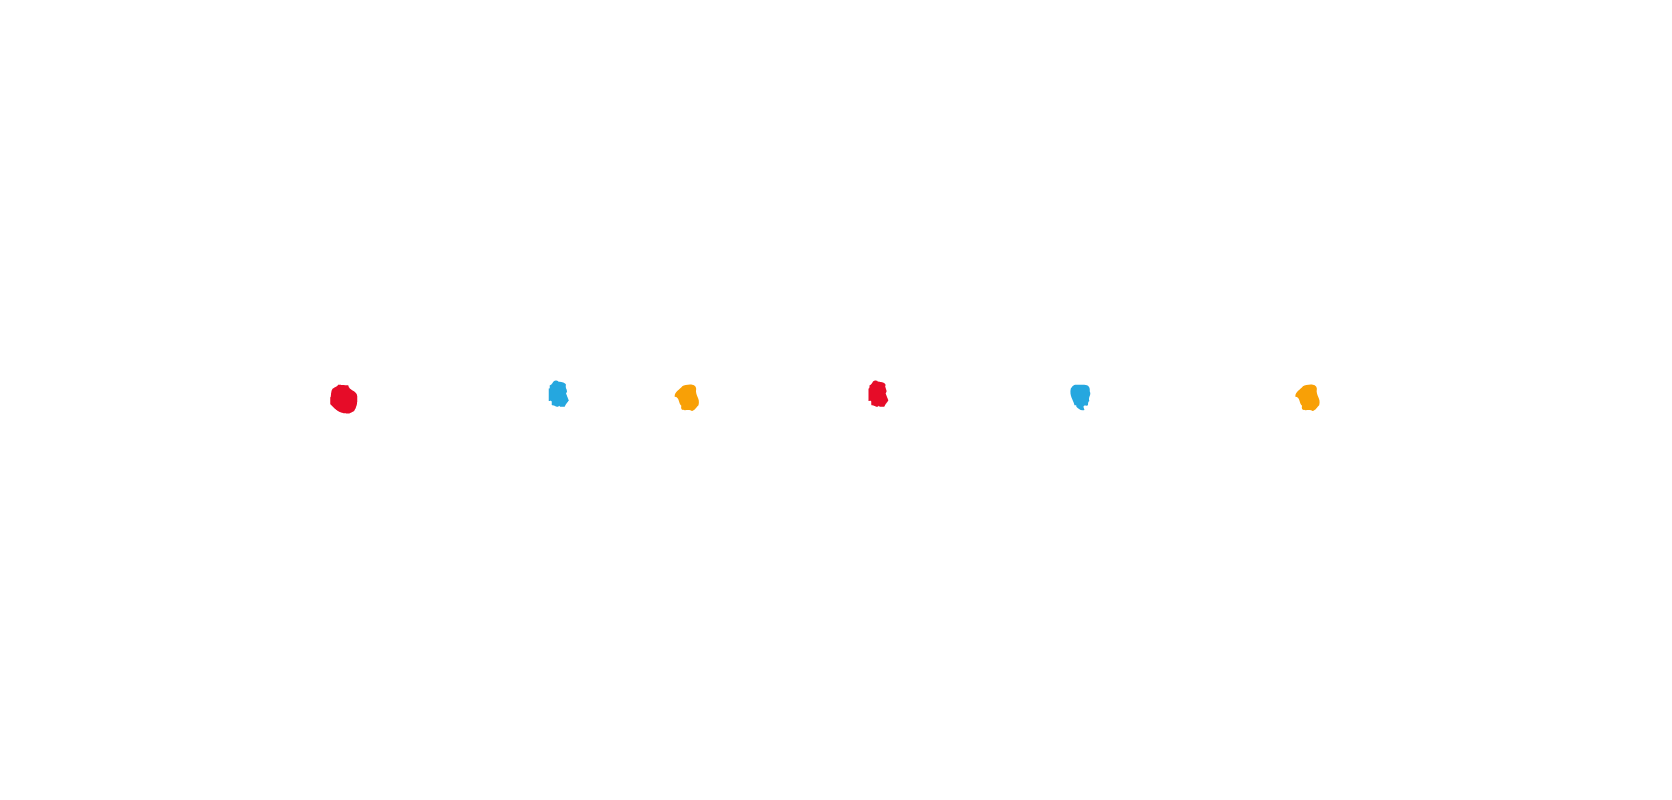 Friends - Redesign